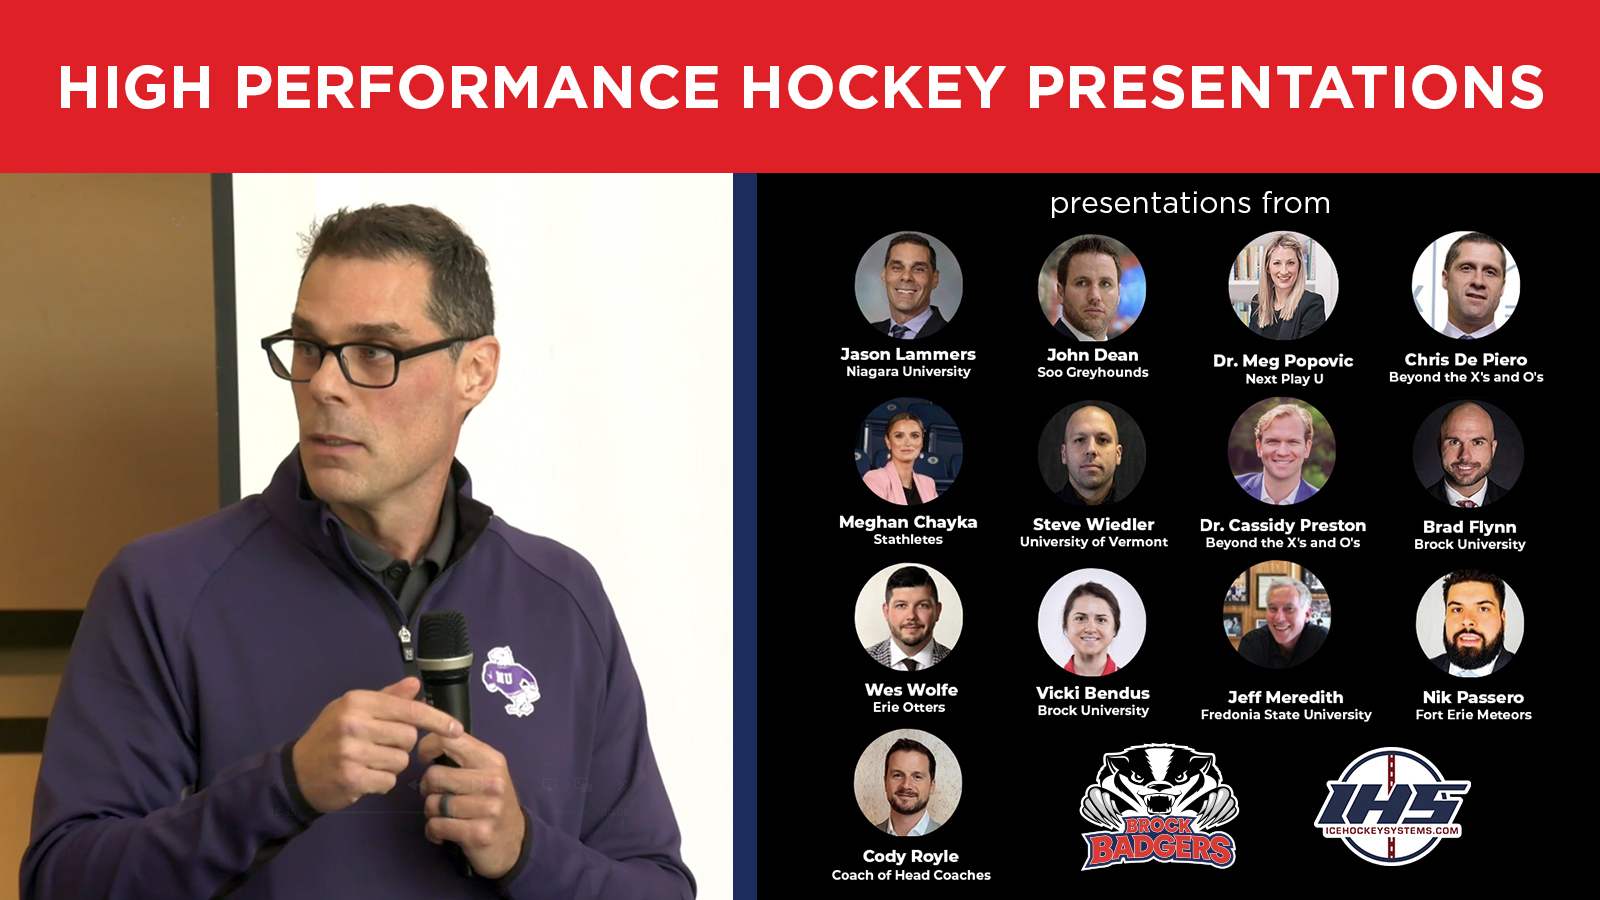 High Performance Hockey Presentations Are Live